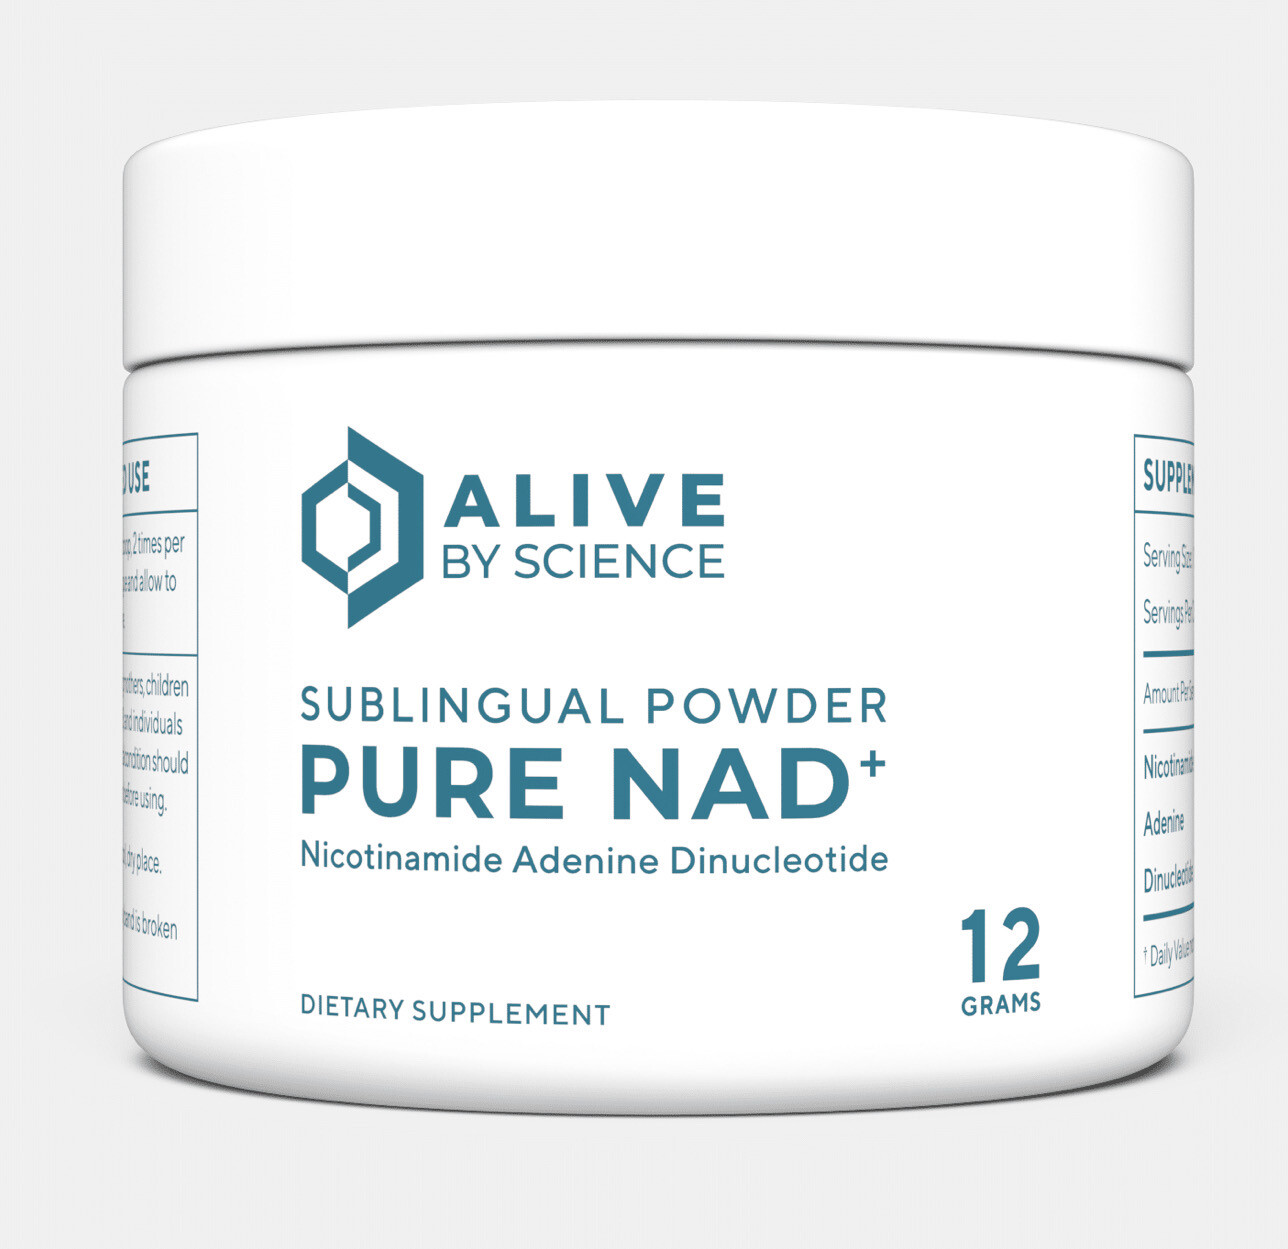 NAD + Powder – 12 Grams Nicotinamide Adenine Dinucleotide